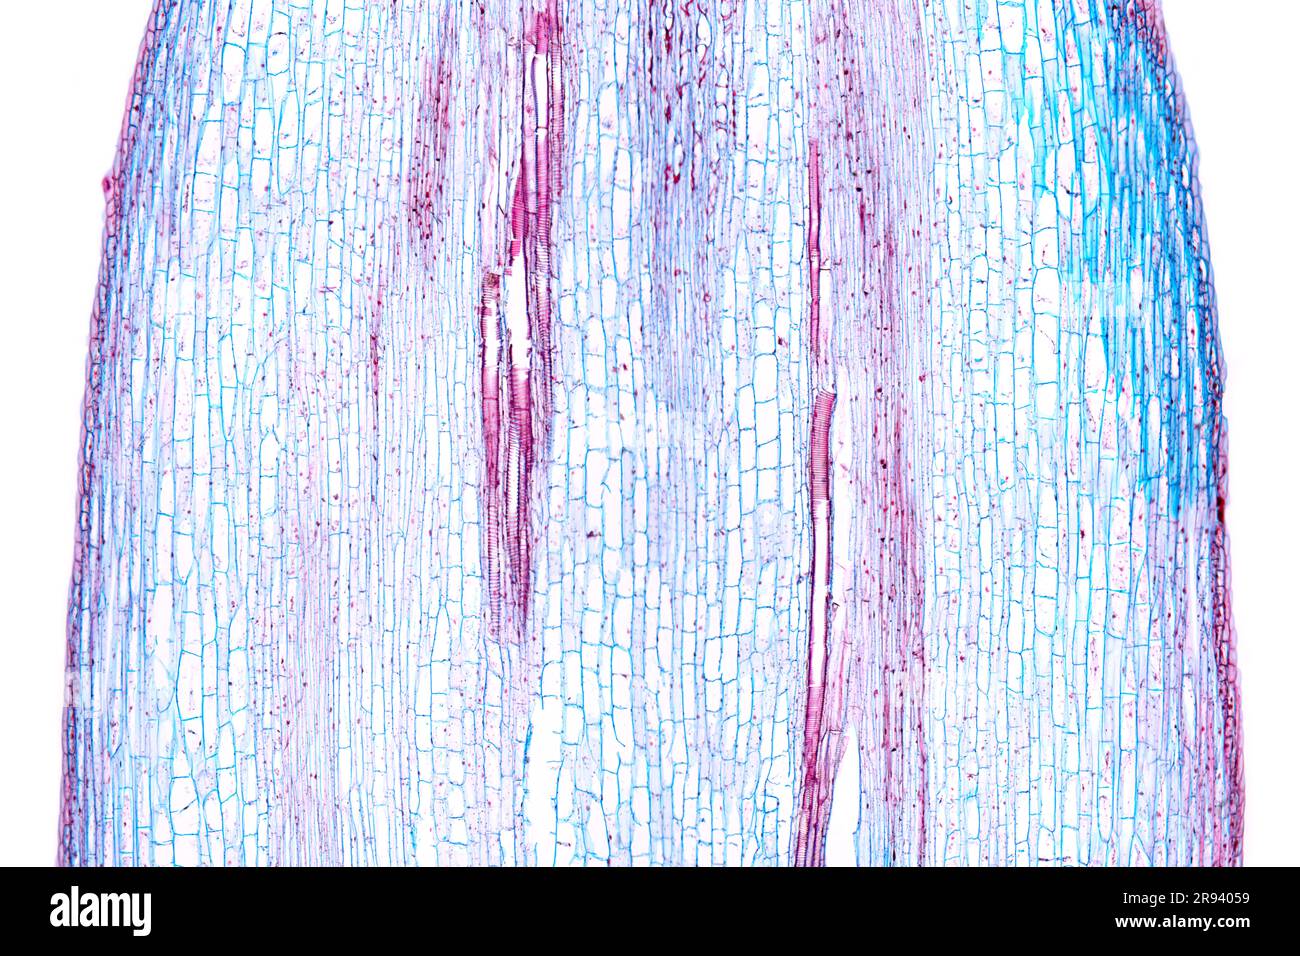 Sunflower stem, longitudinal section, 20X light micrograph. Stem of Helianthus annuus, under light microscope. Hematoxylin-eosin stained. Stock Photo